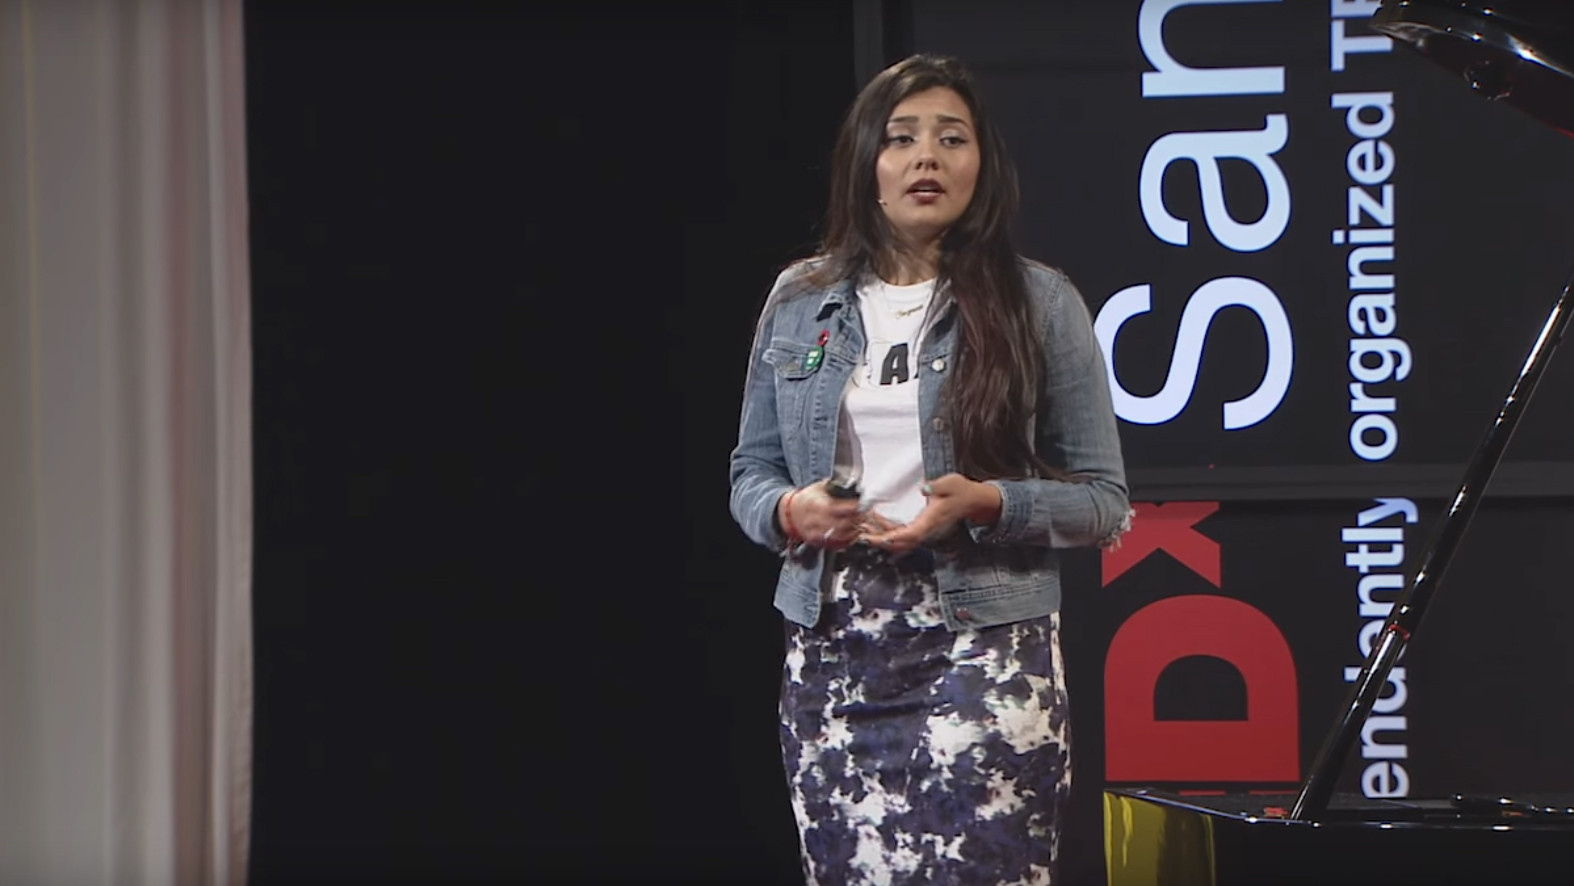 Denise Hernández give a TEDx Talk in 2015 in San Antonio.